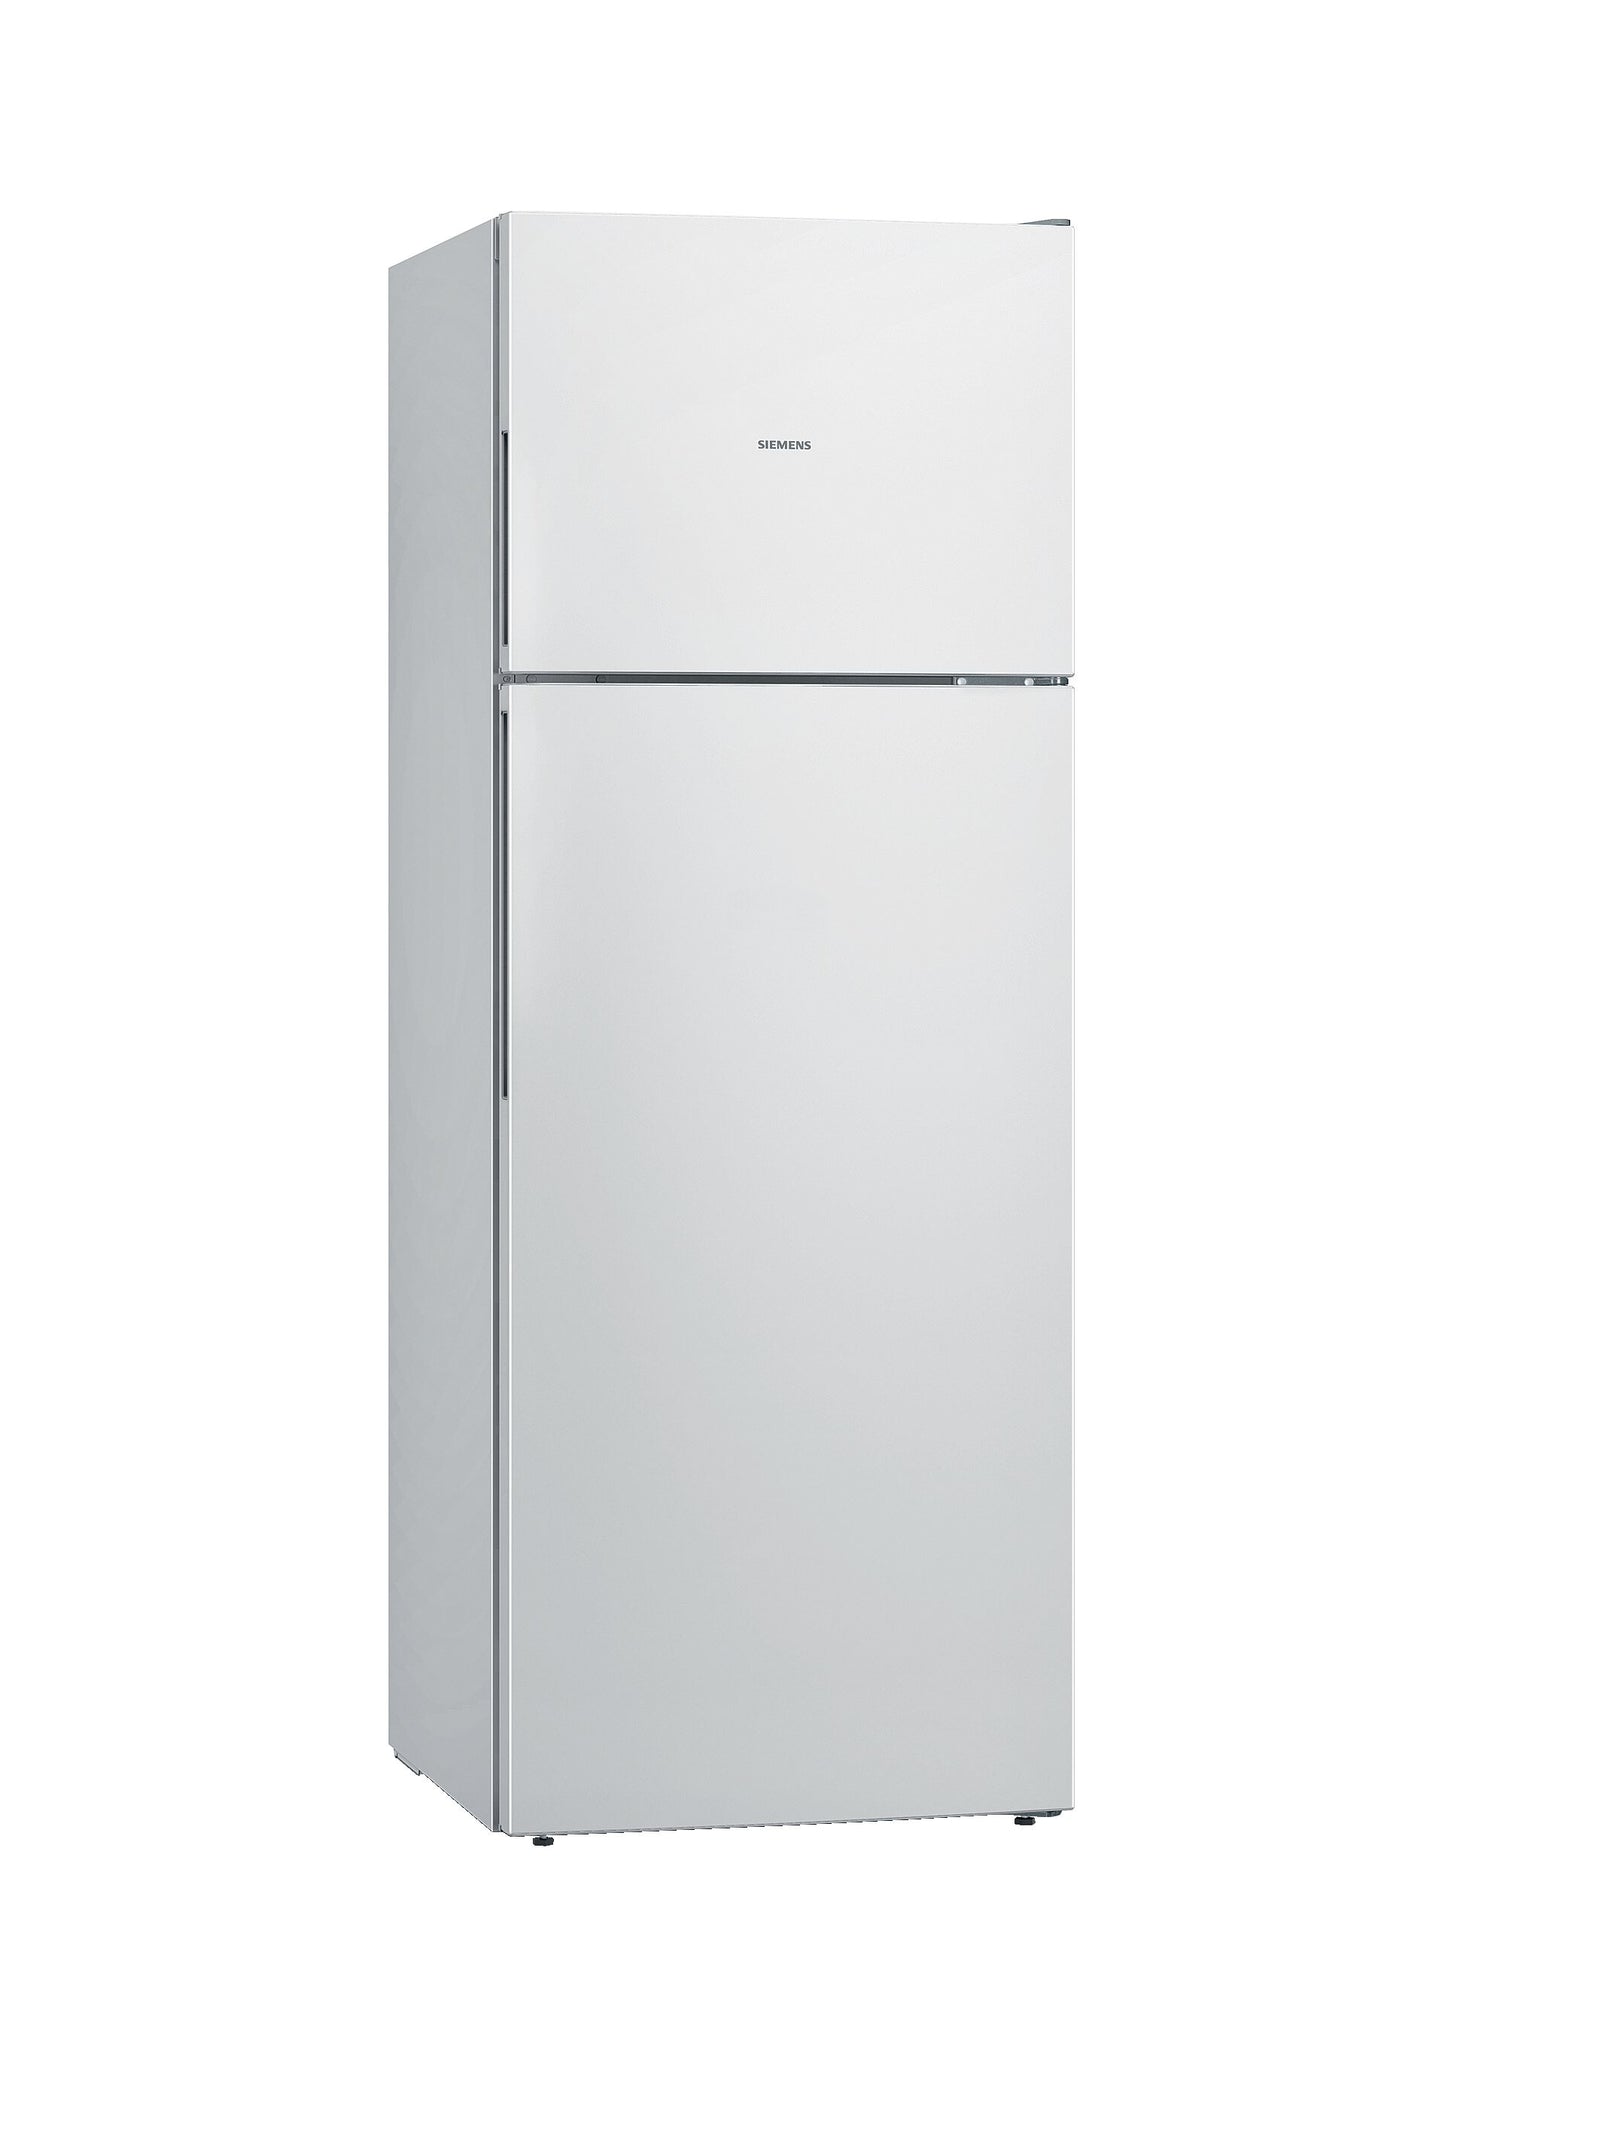 SIEMENS Top Mount Refrigerator IQ300 A+ 509lit WH